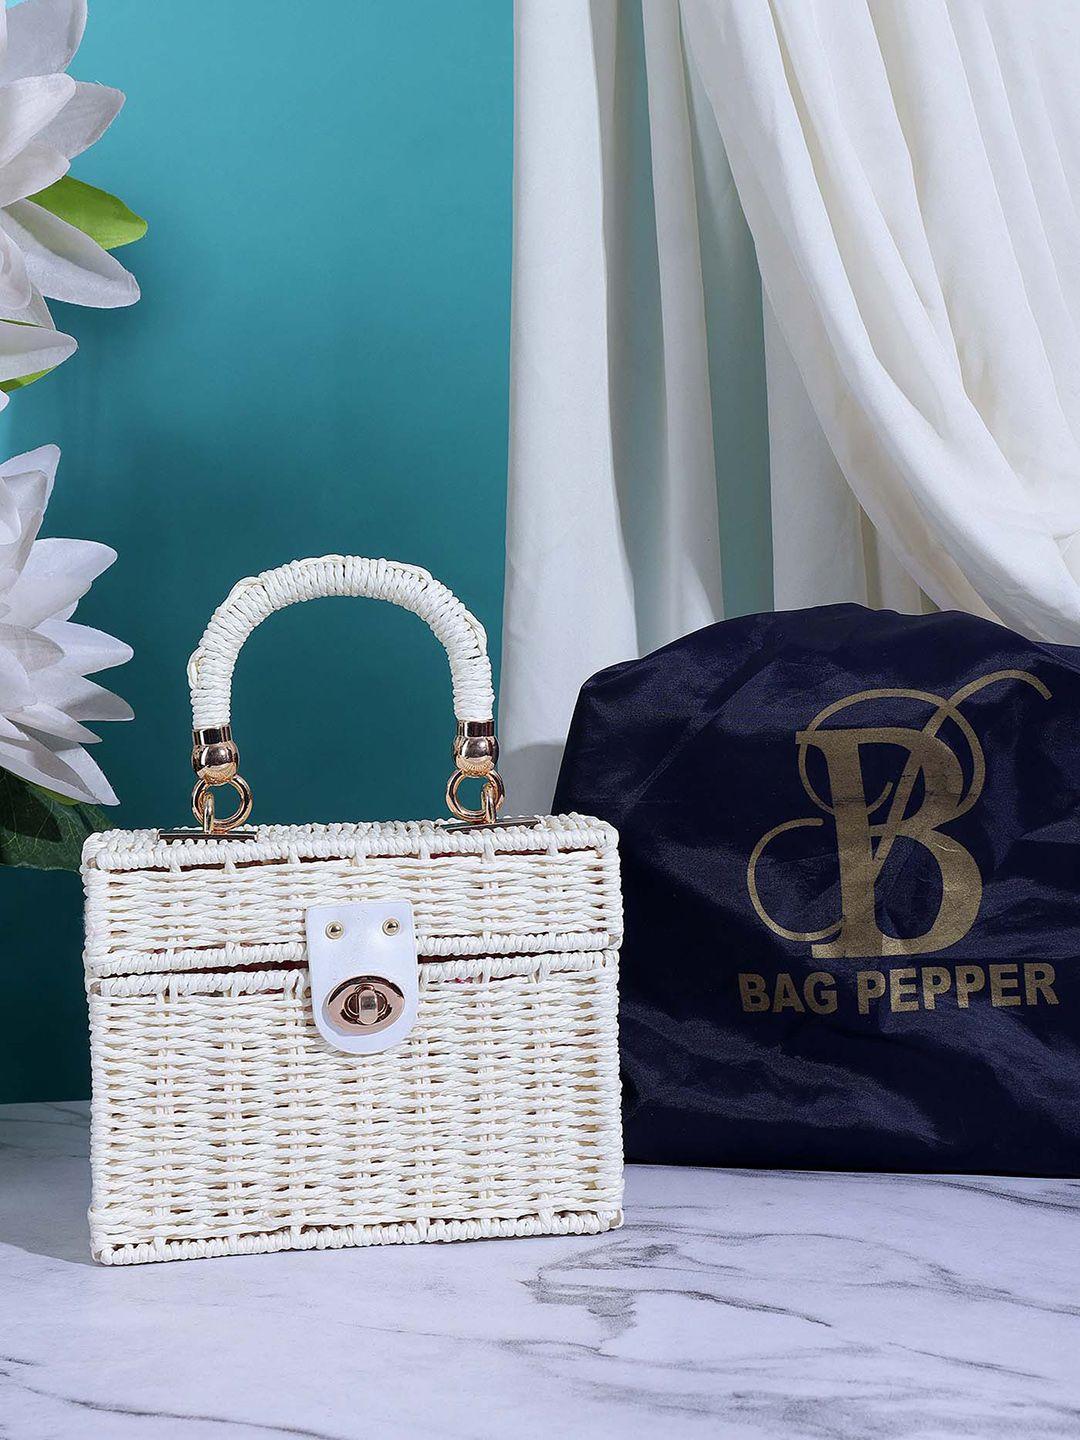 bag pepper white shopper tote bag with applique